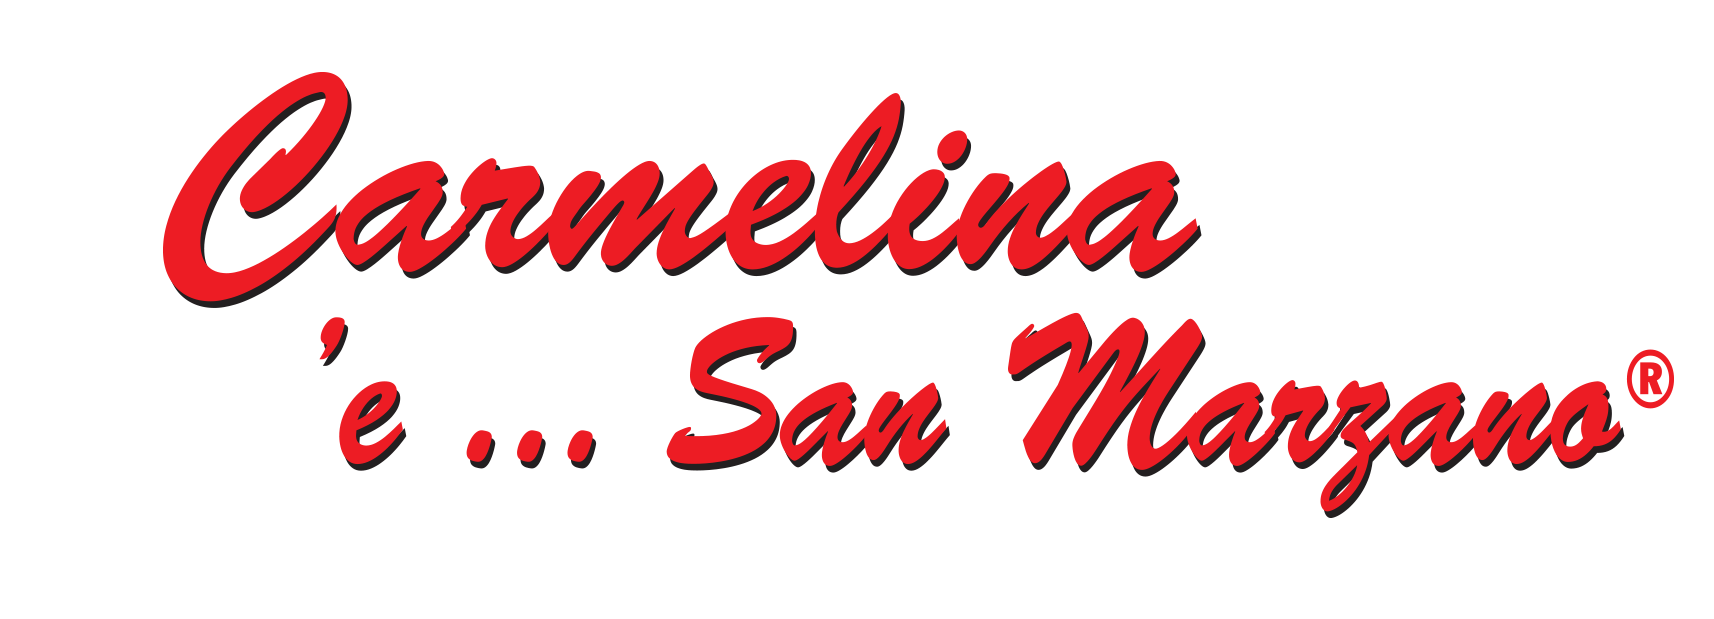 Carmelina Brands (Mangia)